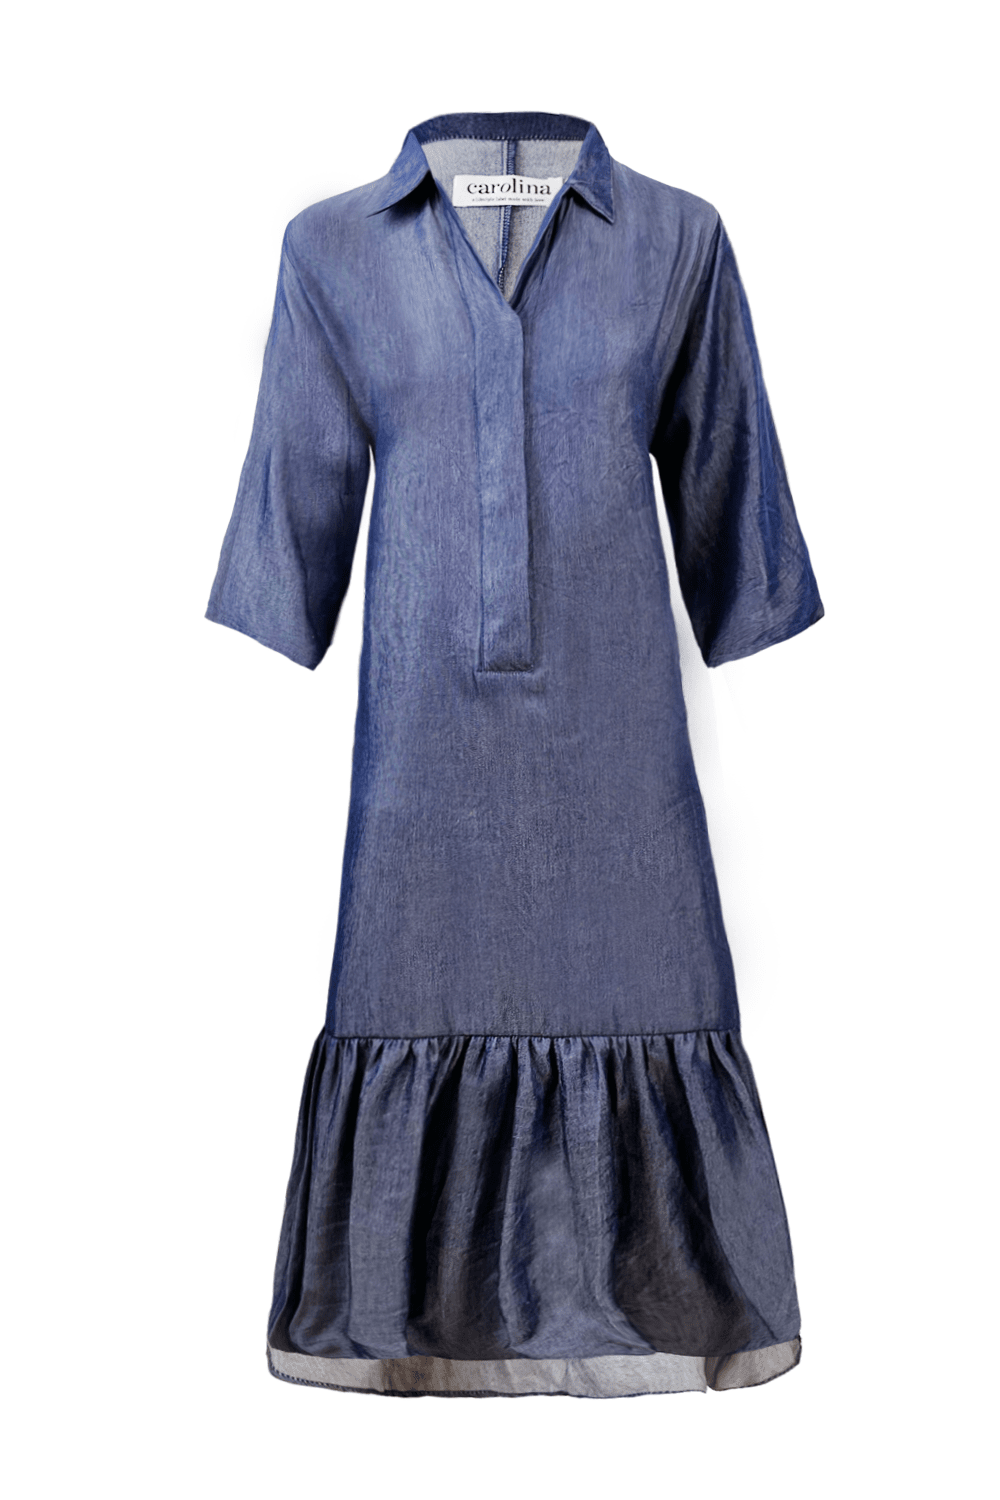 Julia Long Sleeve Tencel Dress Tunics